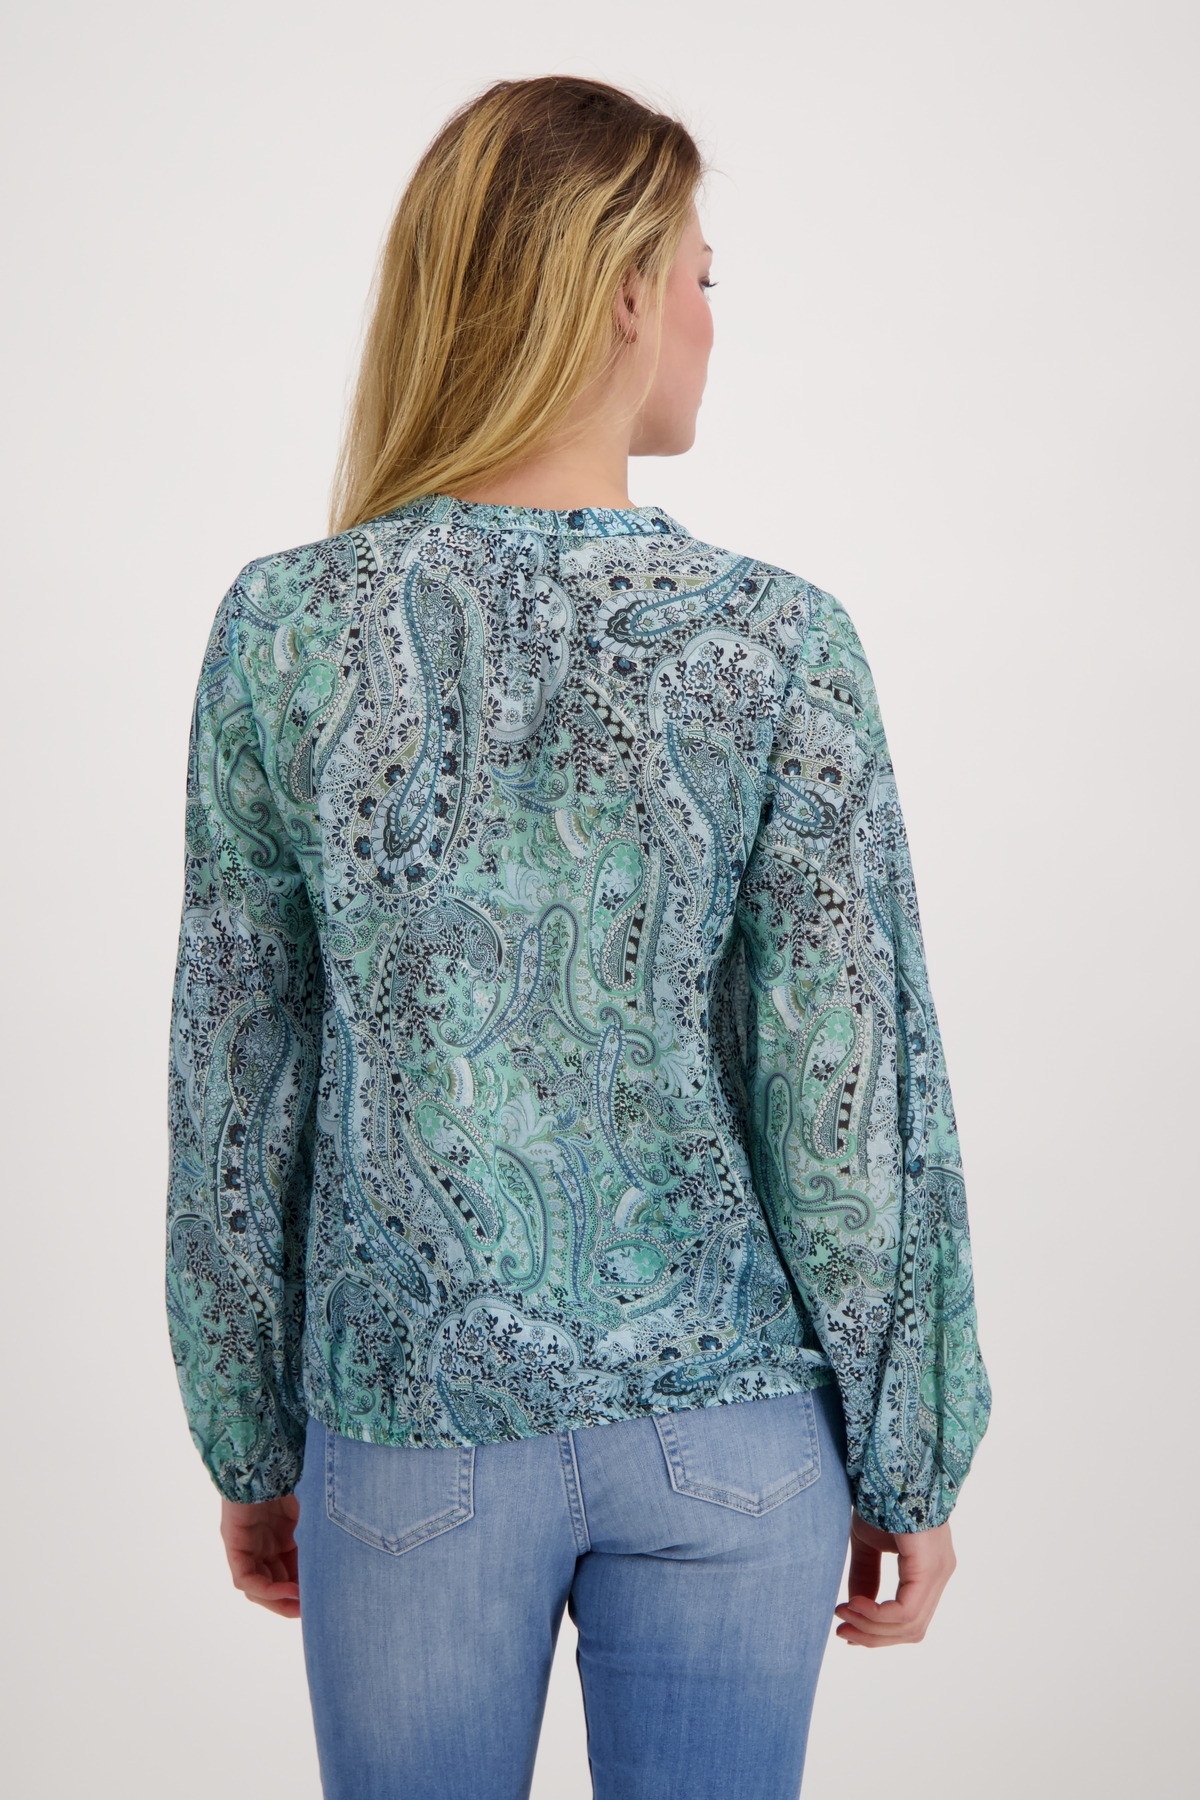 Monari Paisley Muster Bluse fresh - Shop gemustert Mode Hartmann mint mit Gummizug